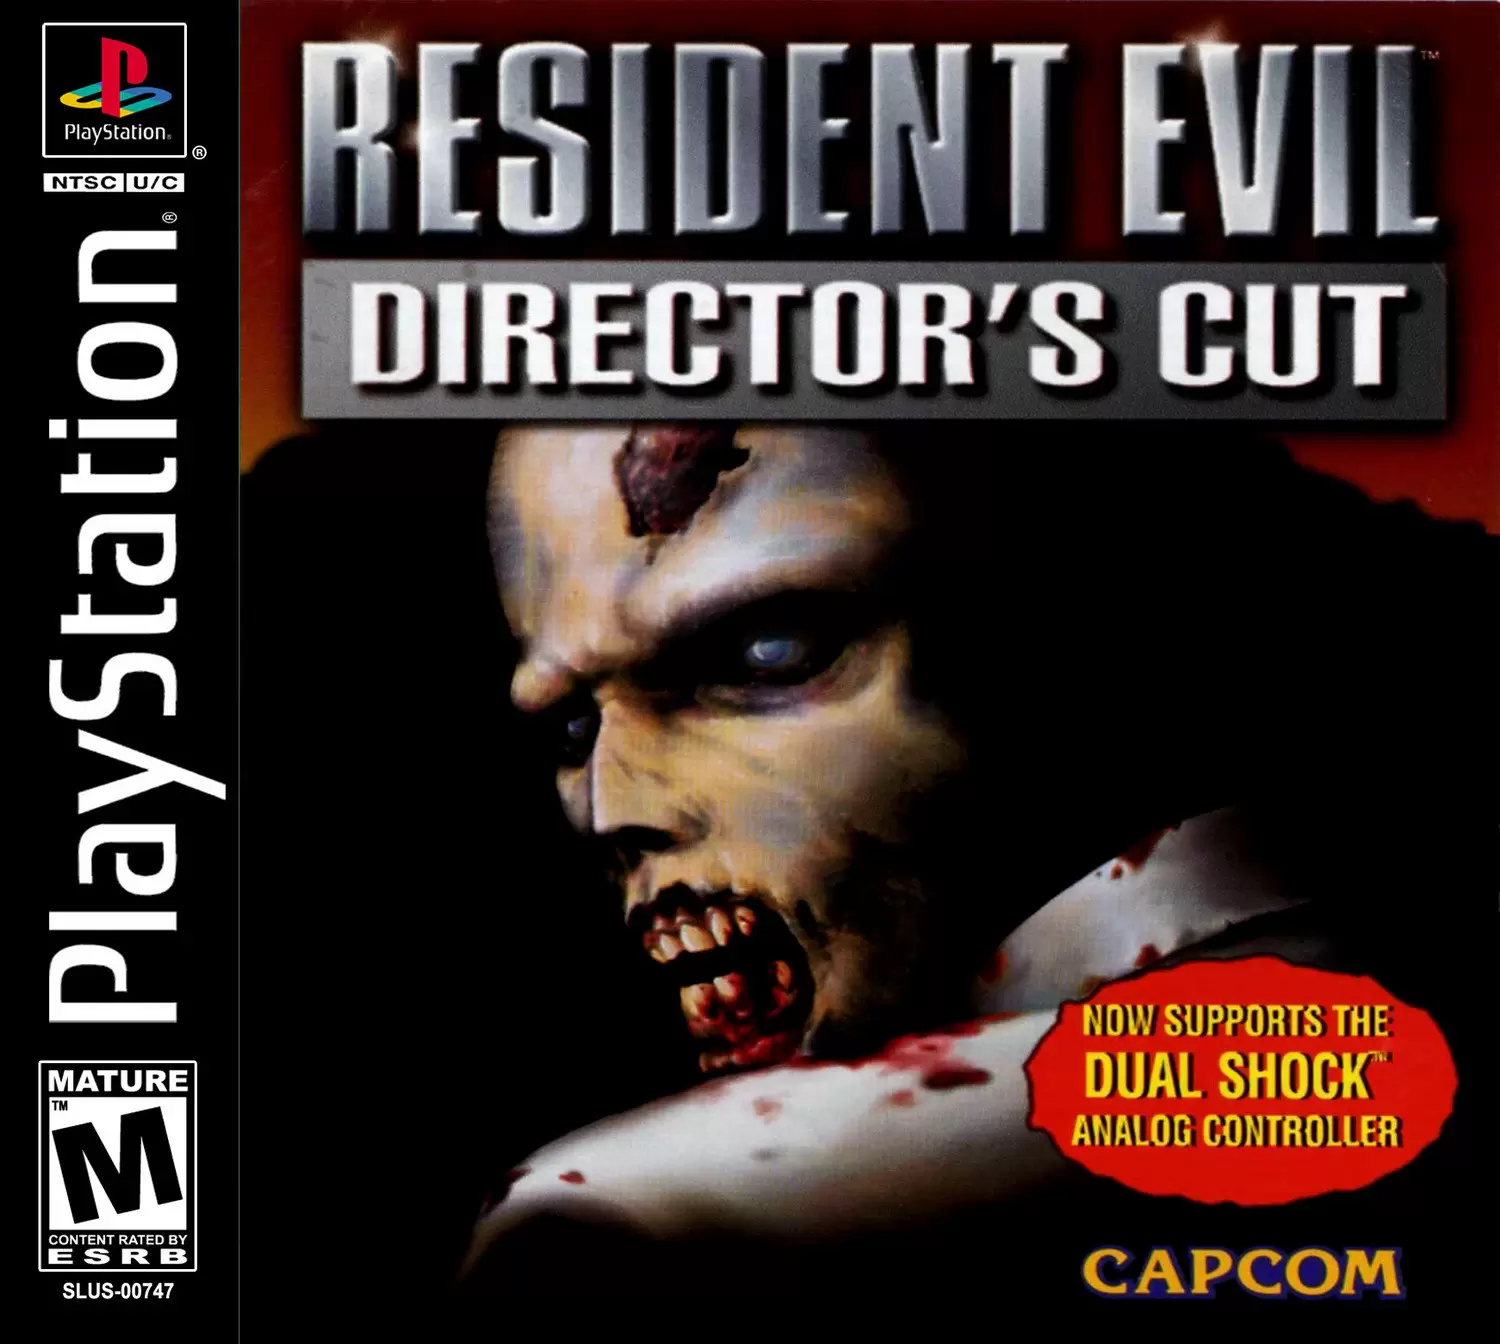 Resident Evil Village Game PS5 (NTSC)